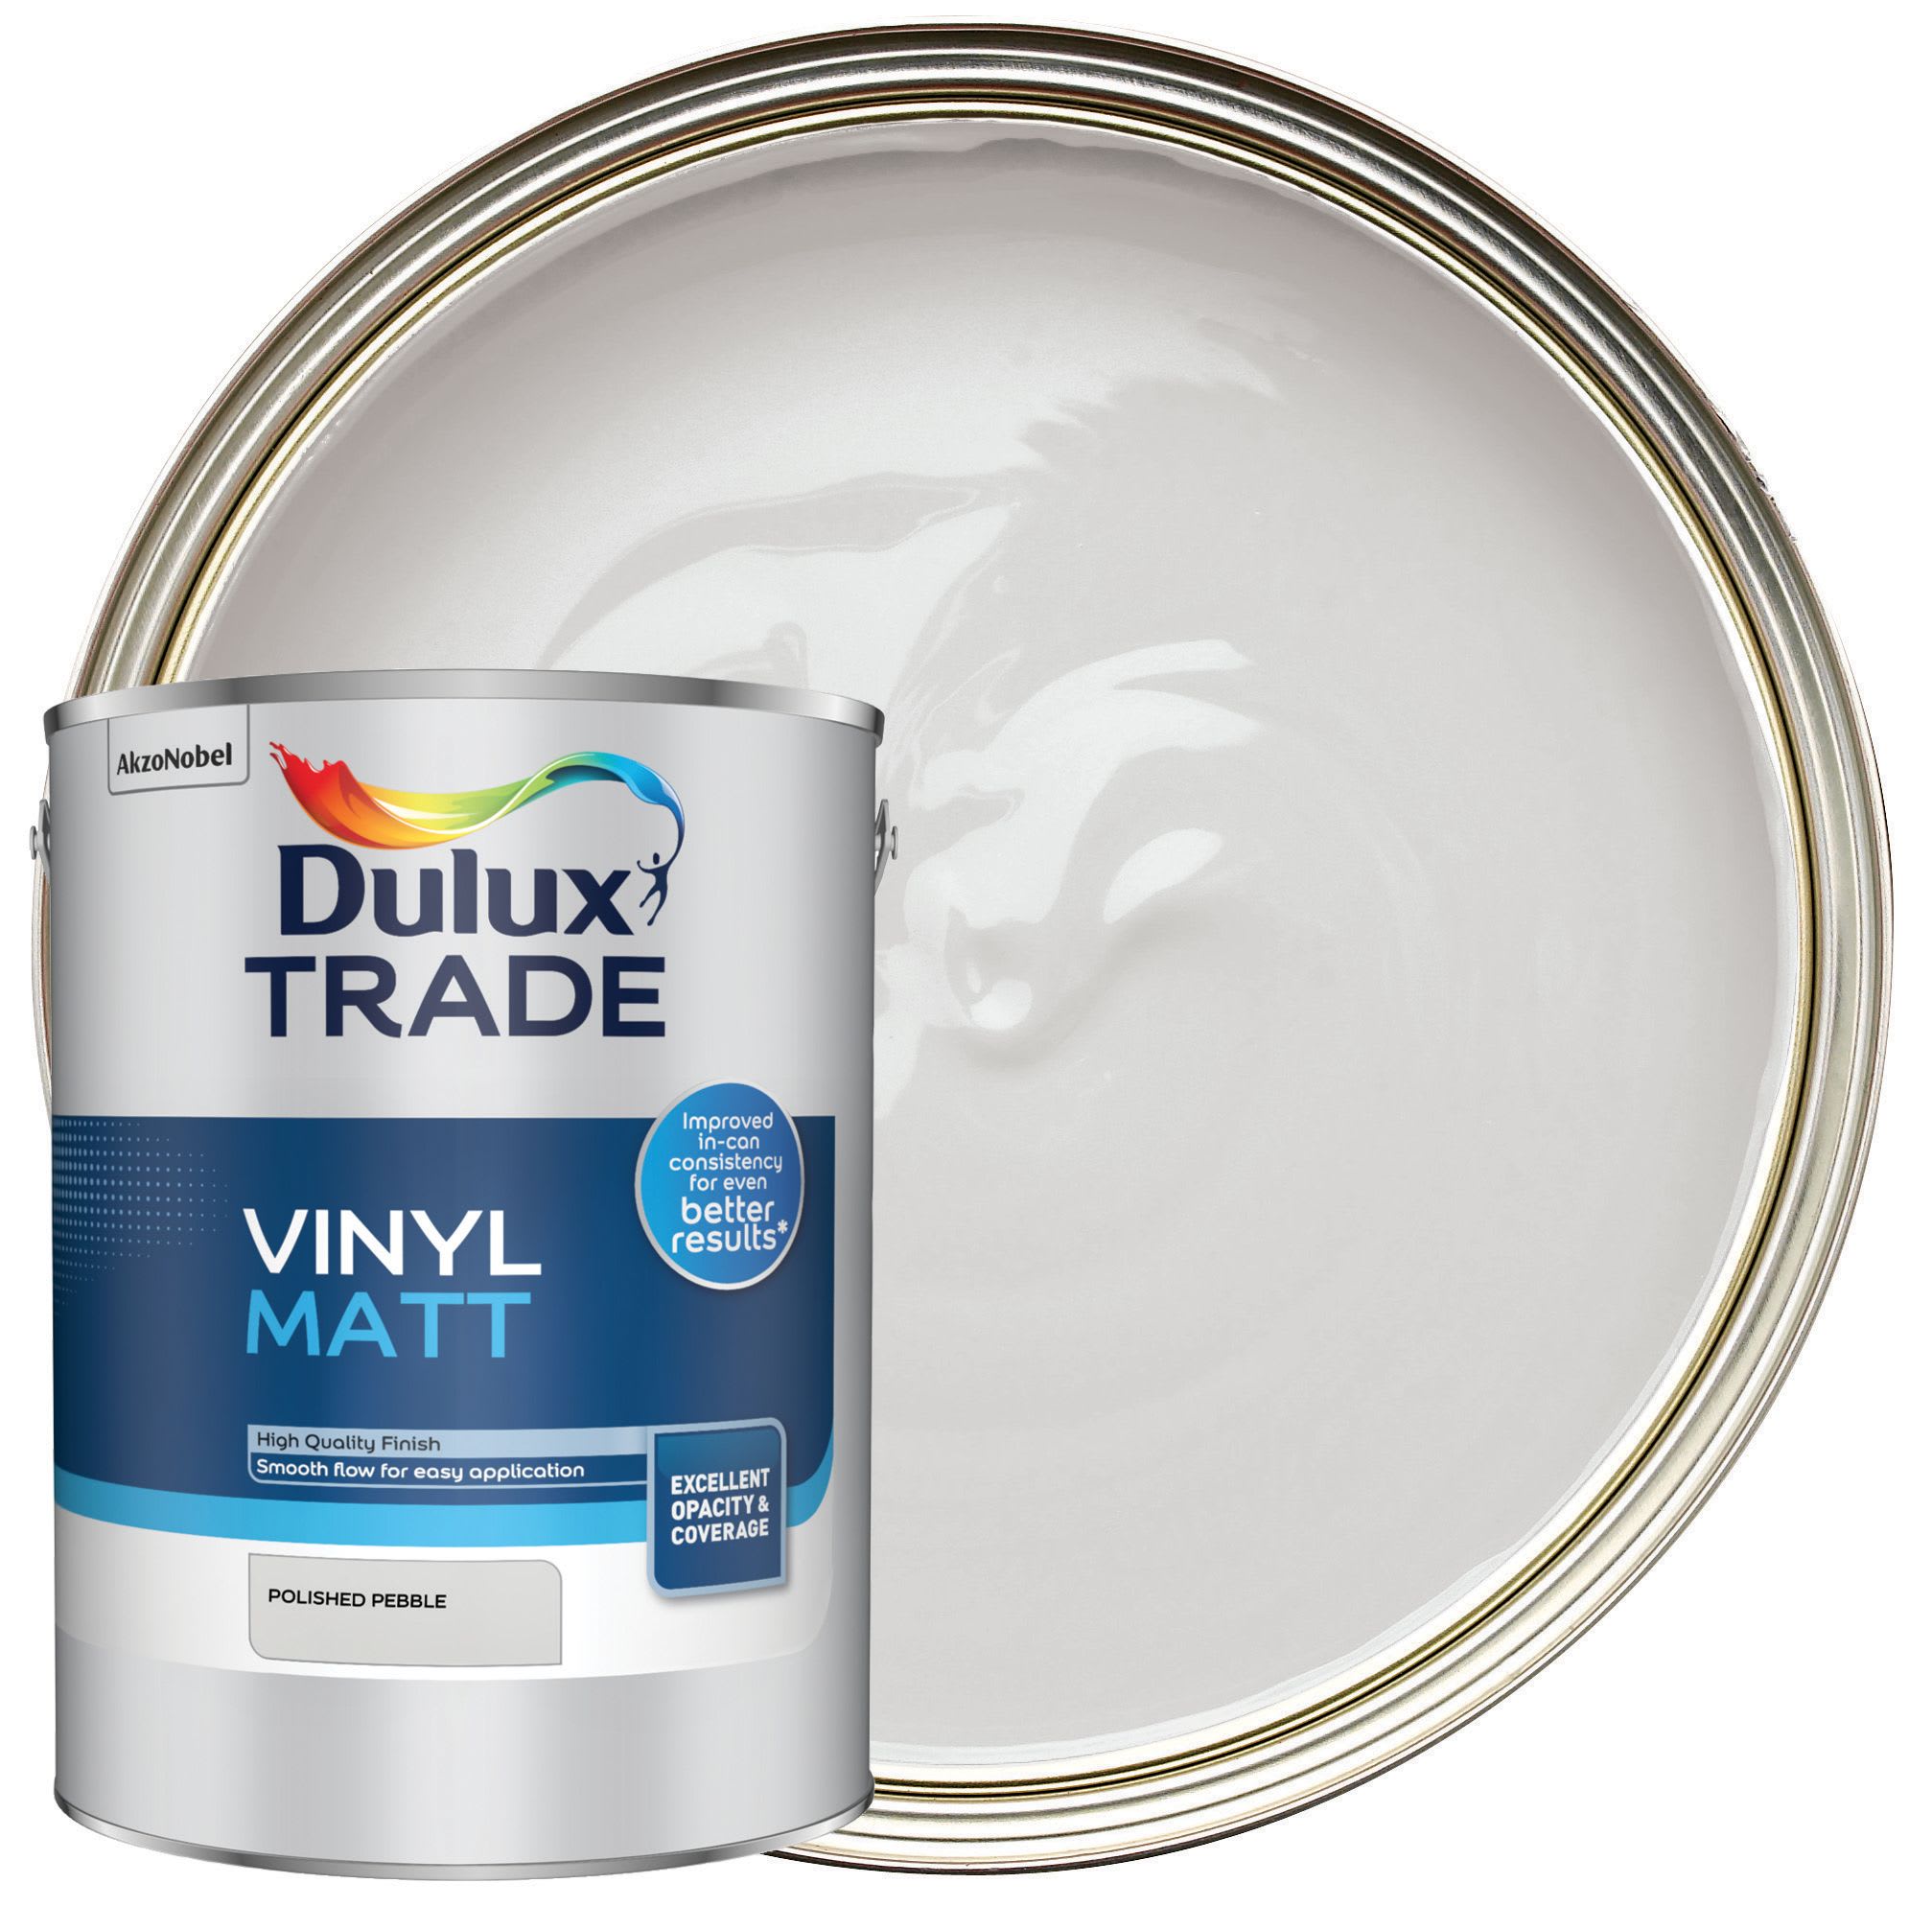 Dulux Trade Vinyl Matt Emulsion Paint - Polished